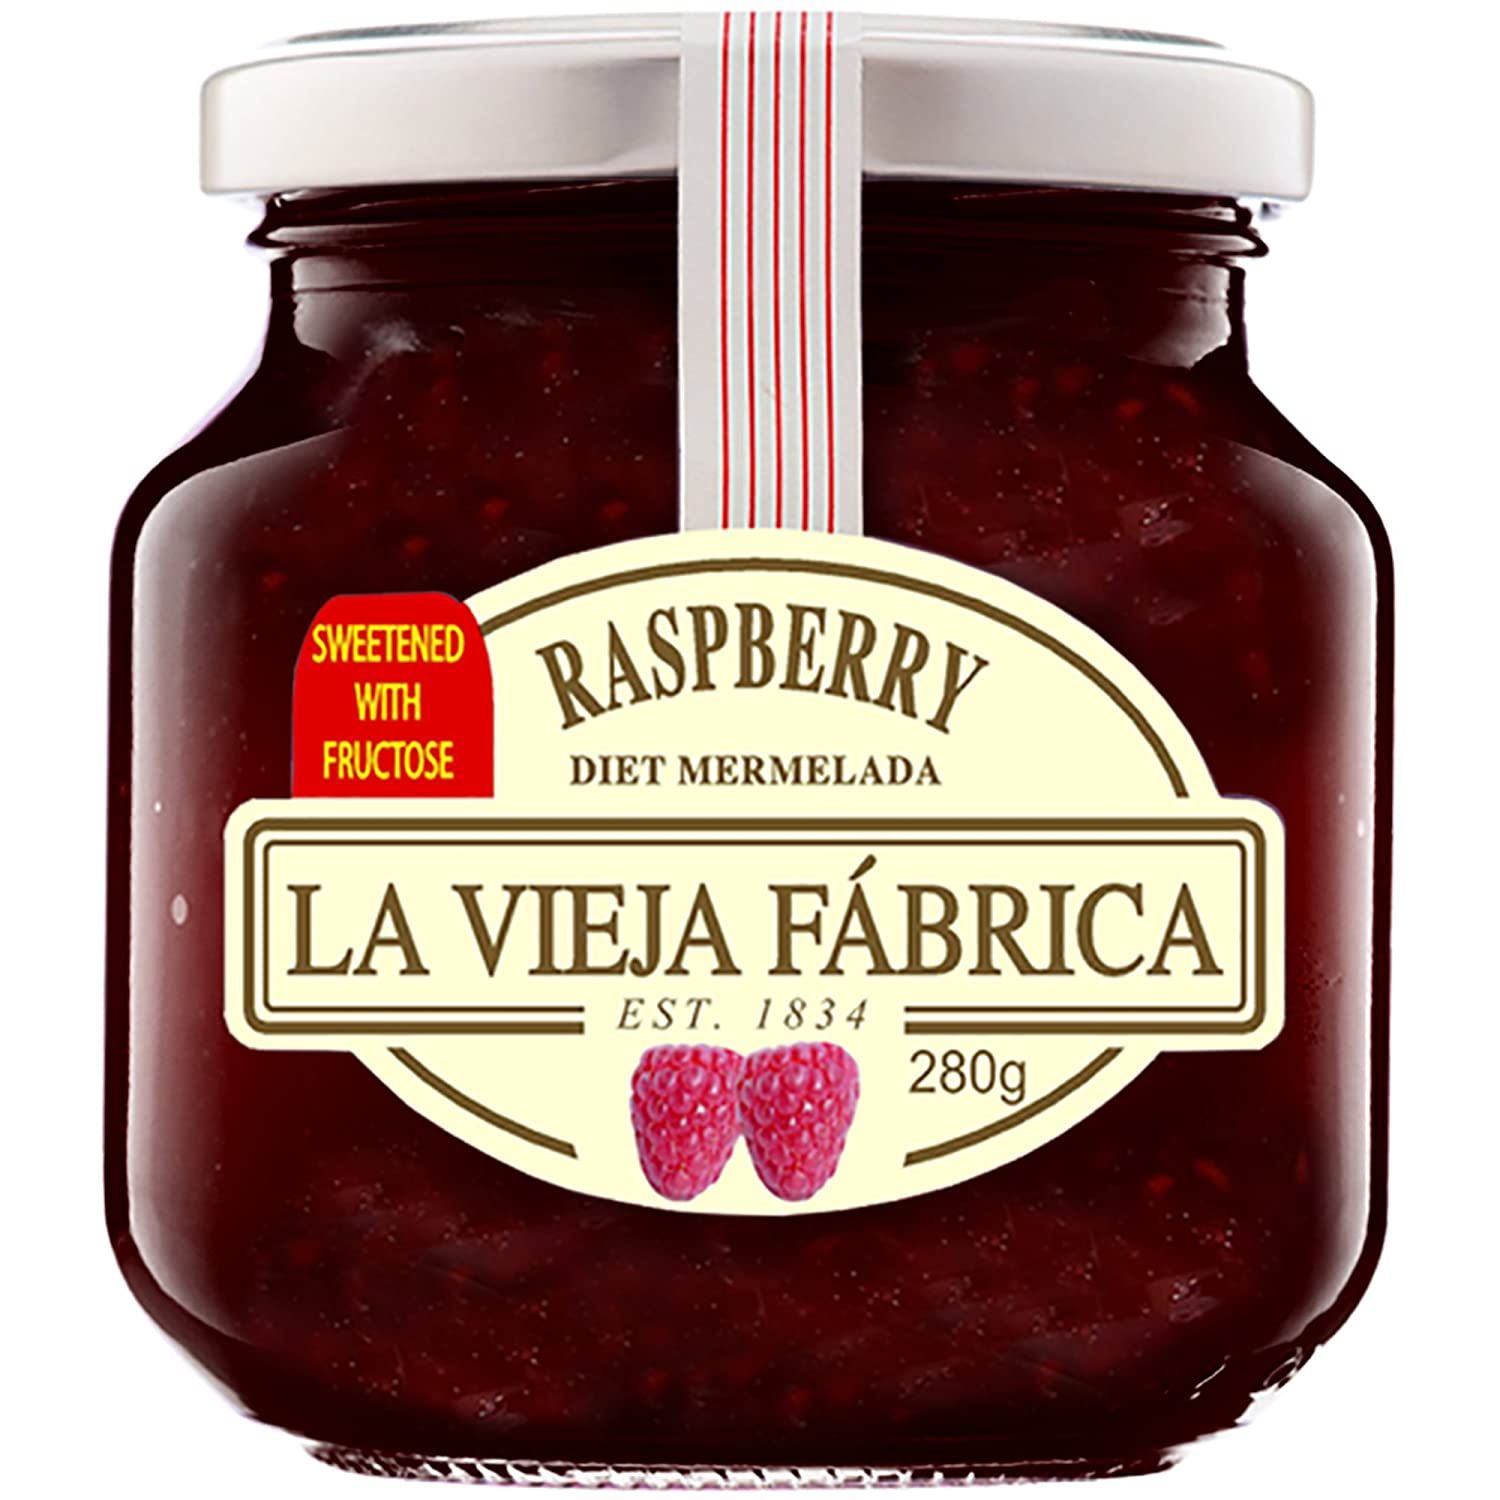 La Vieja Fabrica Raspberry Diet Mermelada (Jam) Image